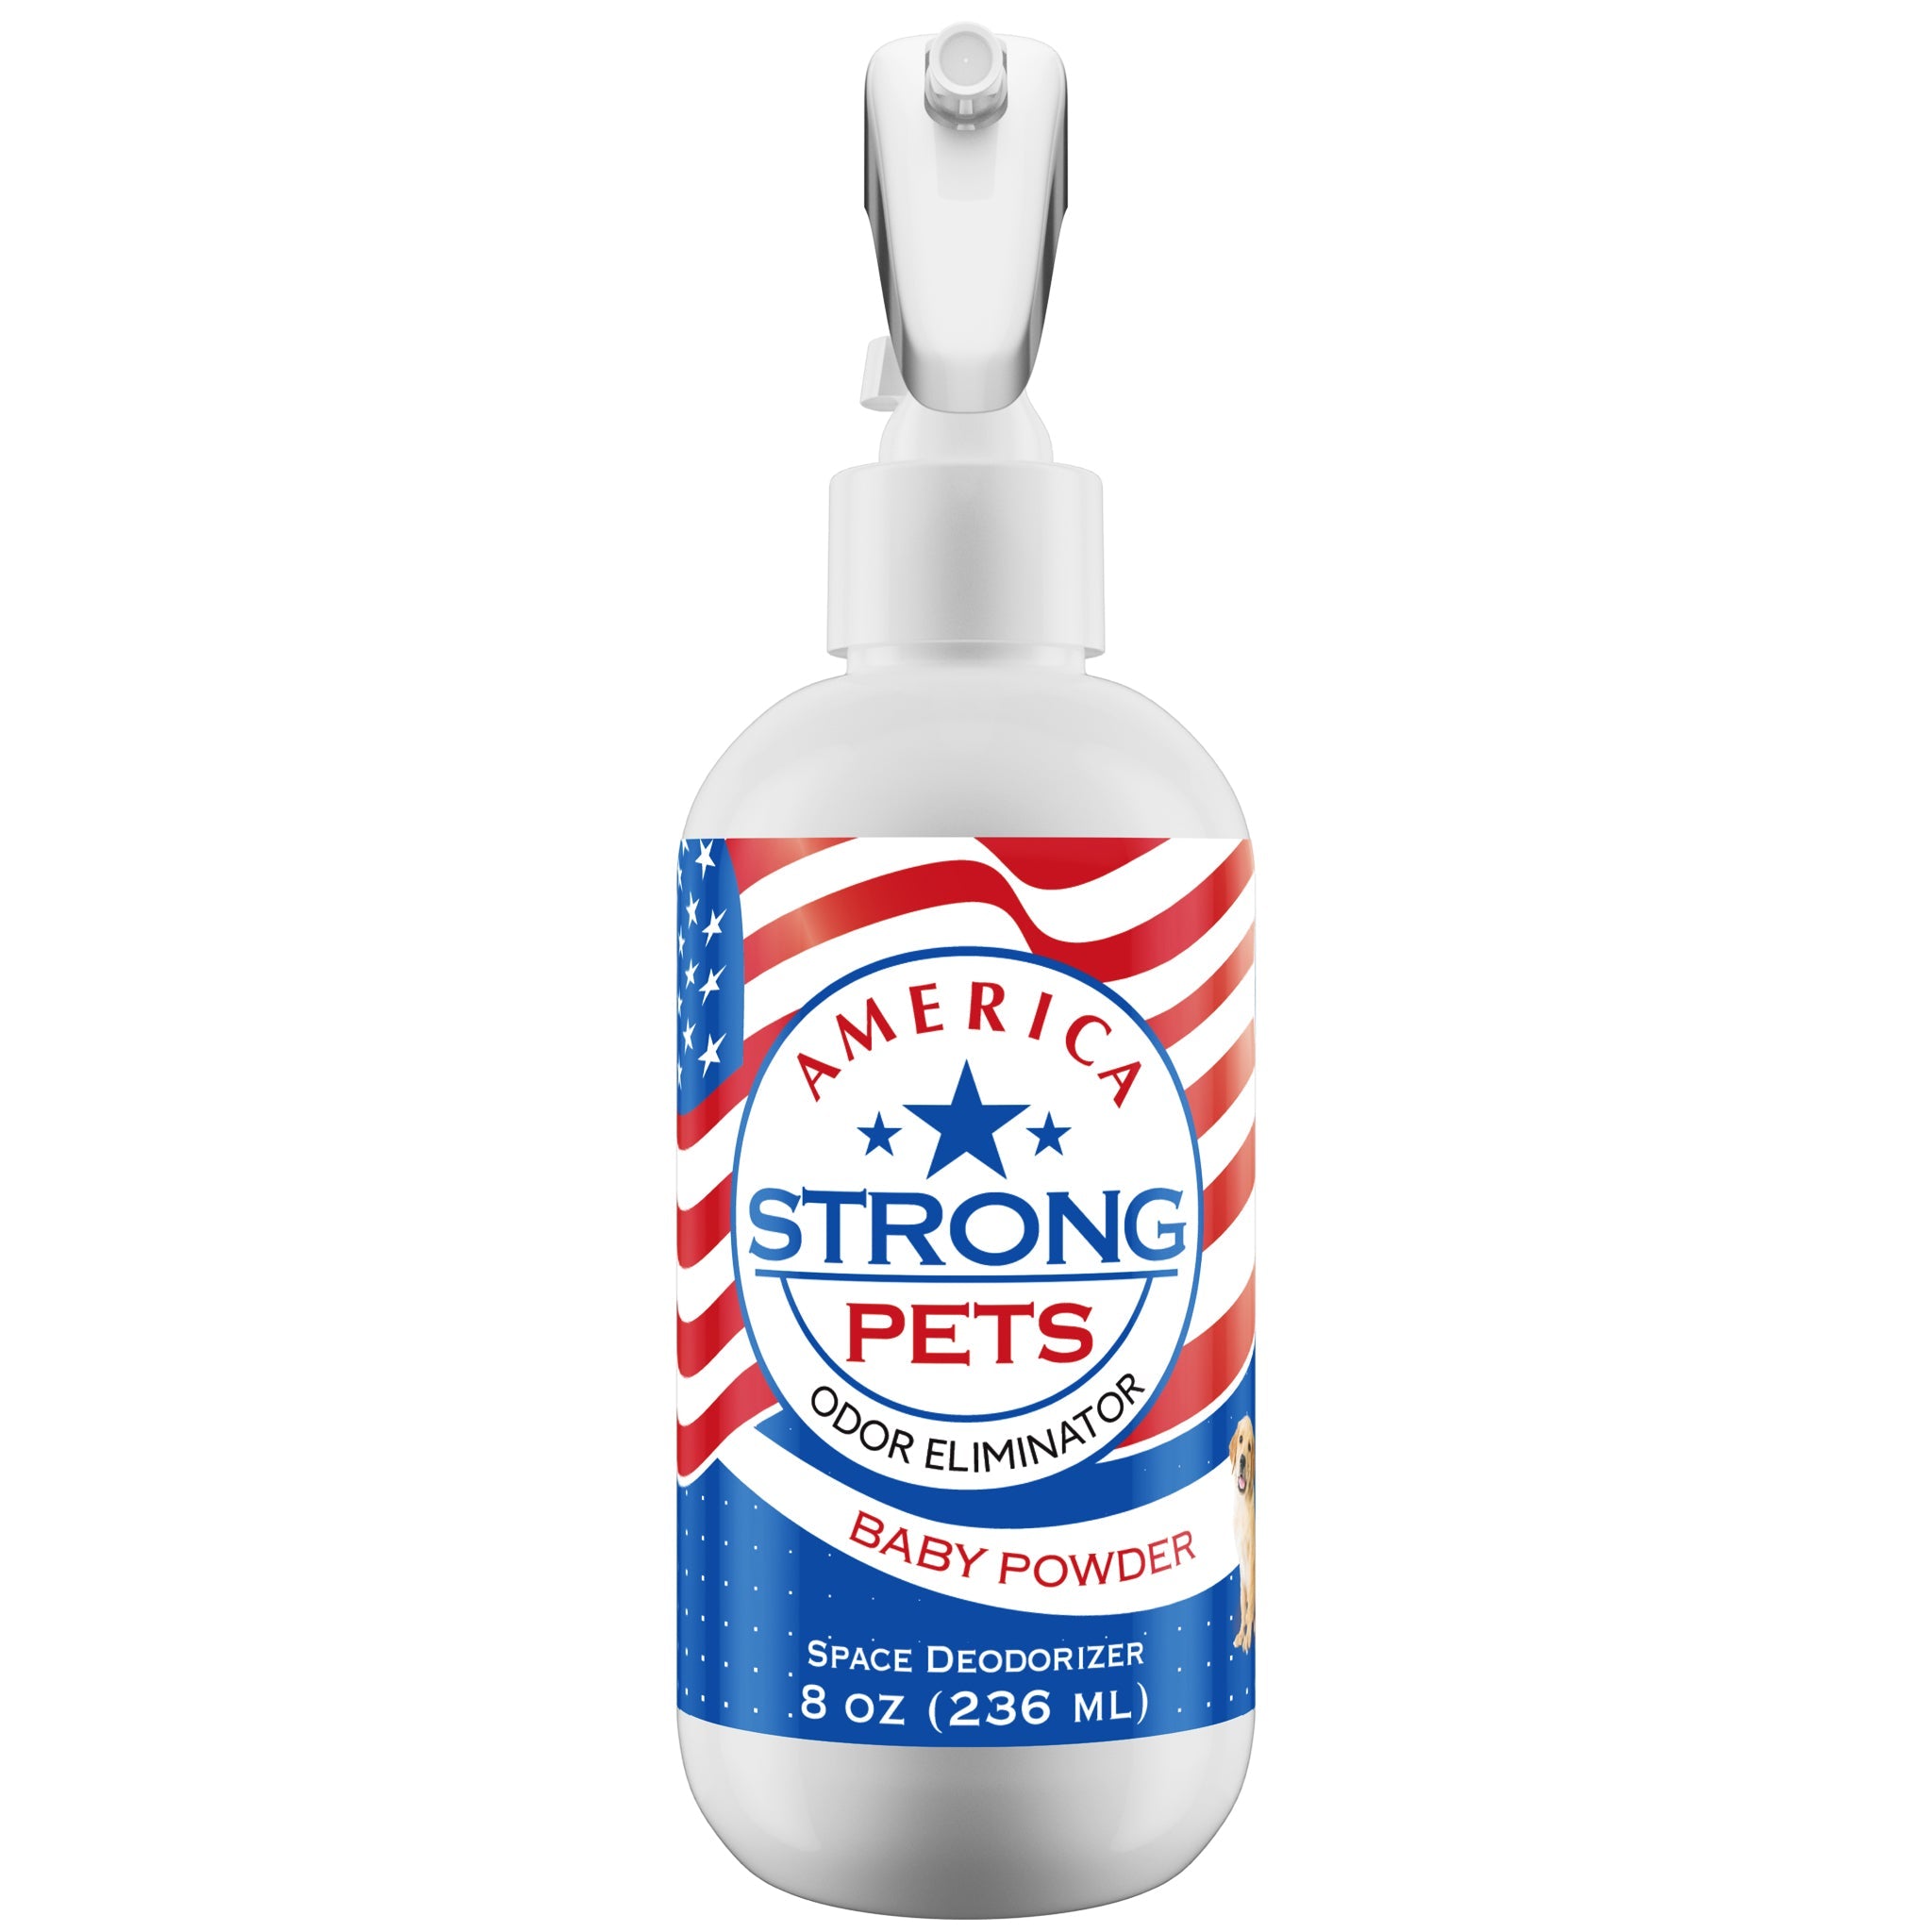 America Strong Pet Odor Eliminator - Baby Powder Scent Size: 8 fl oz